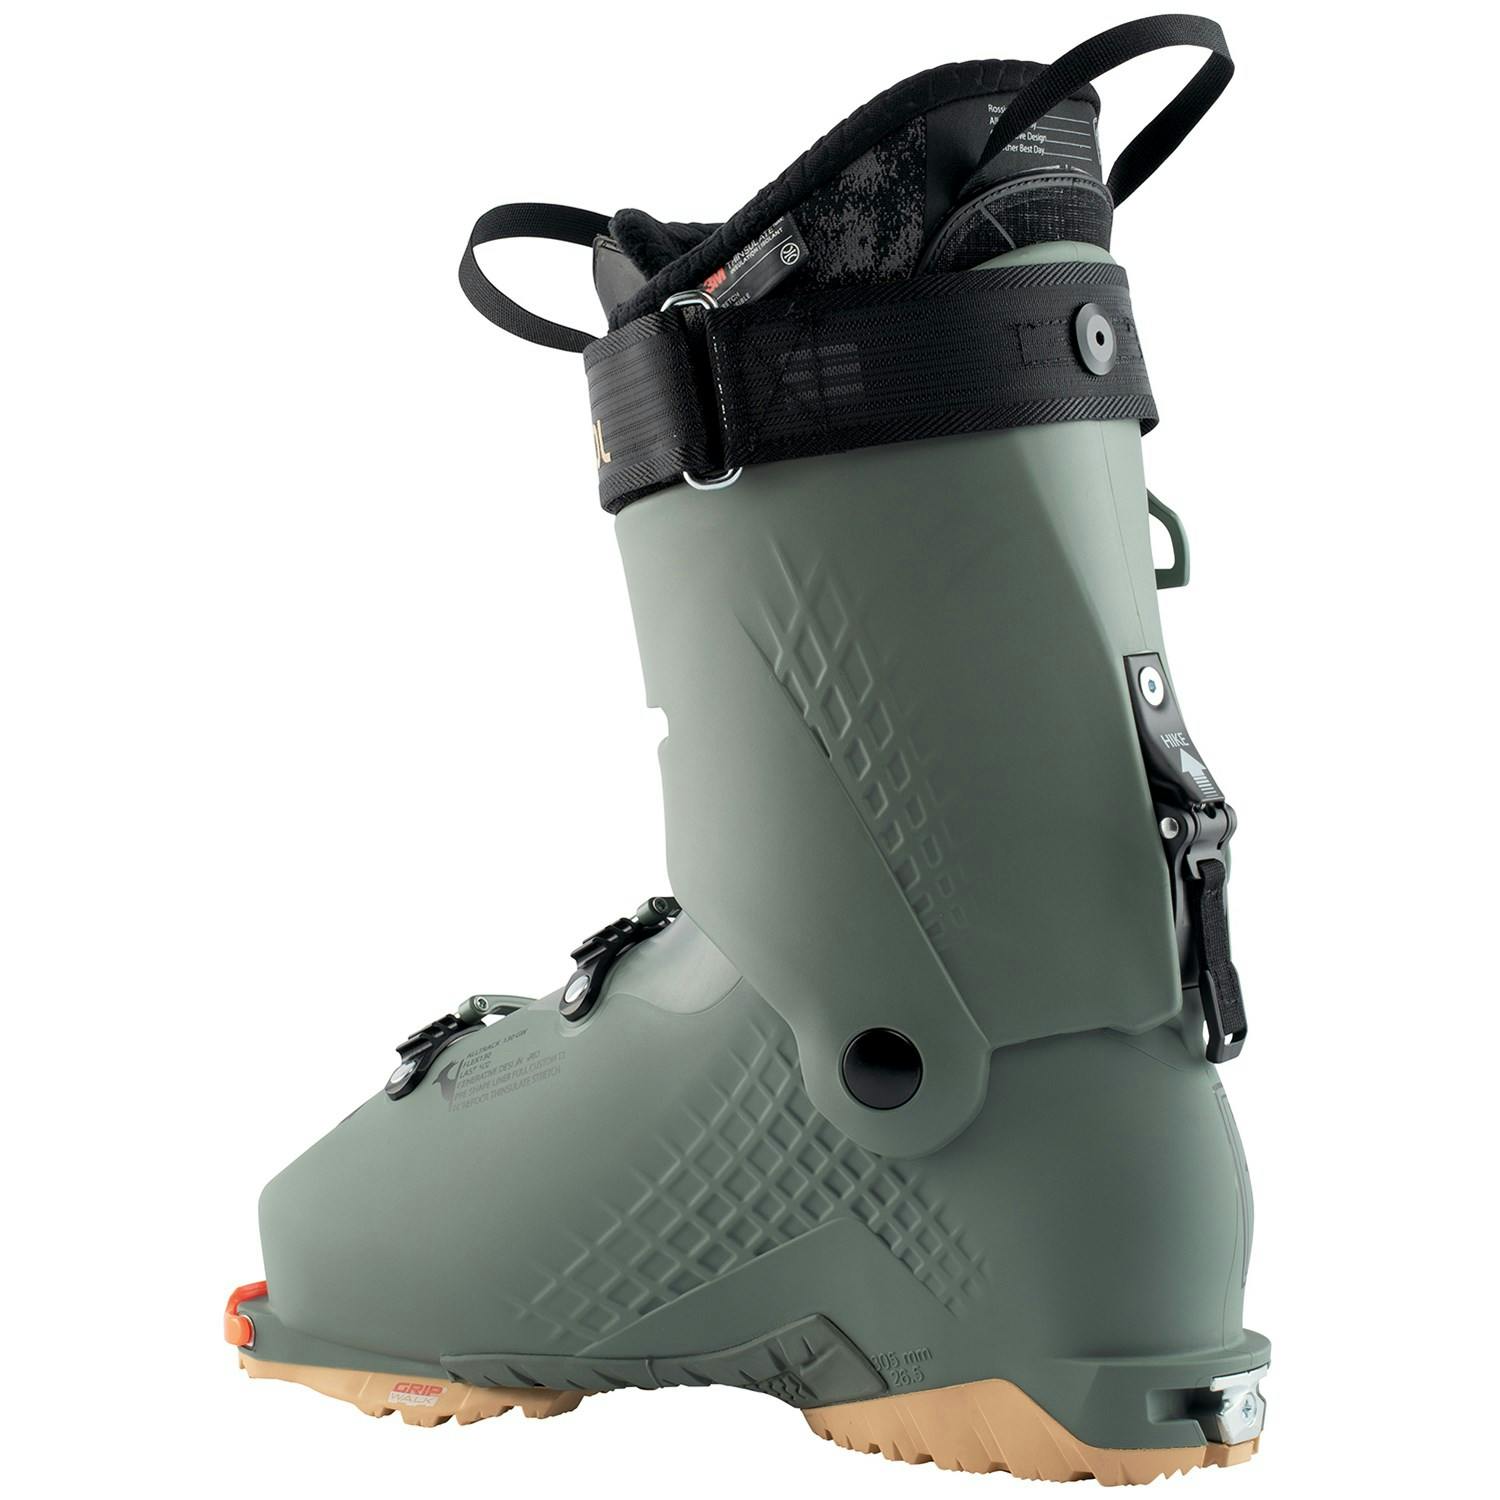 Rossignol Alltrack 130 GW Ski Boots · 2023